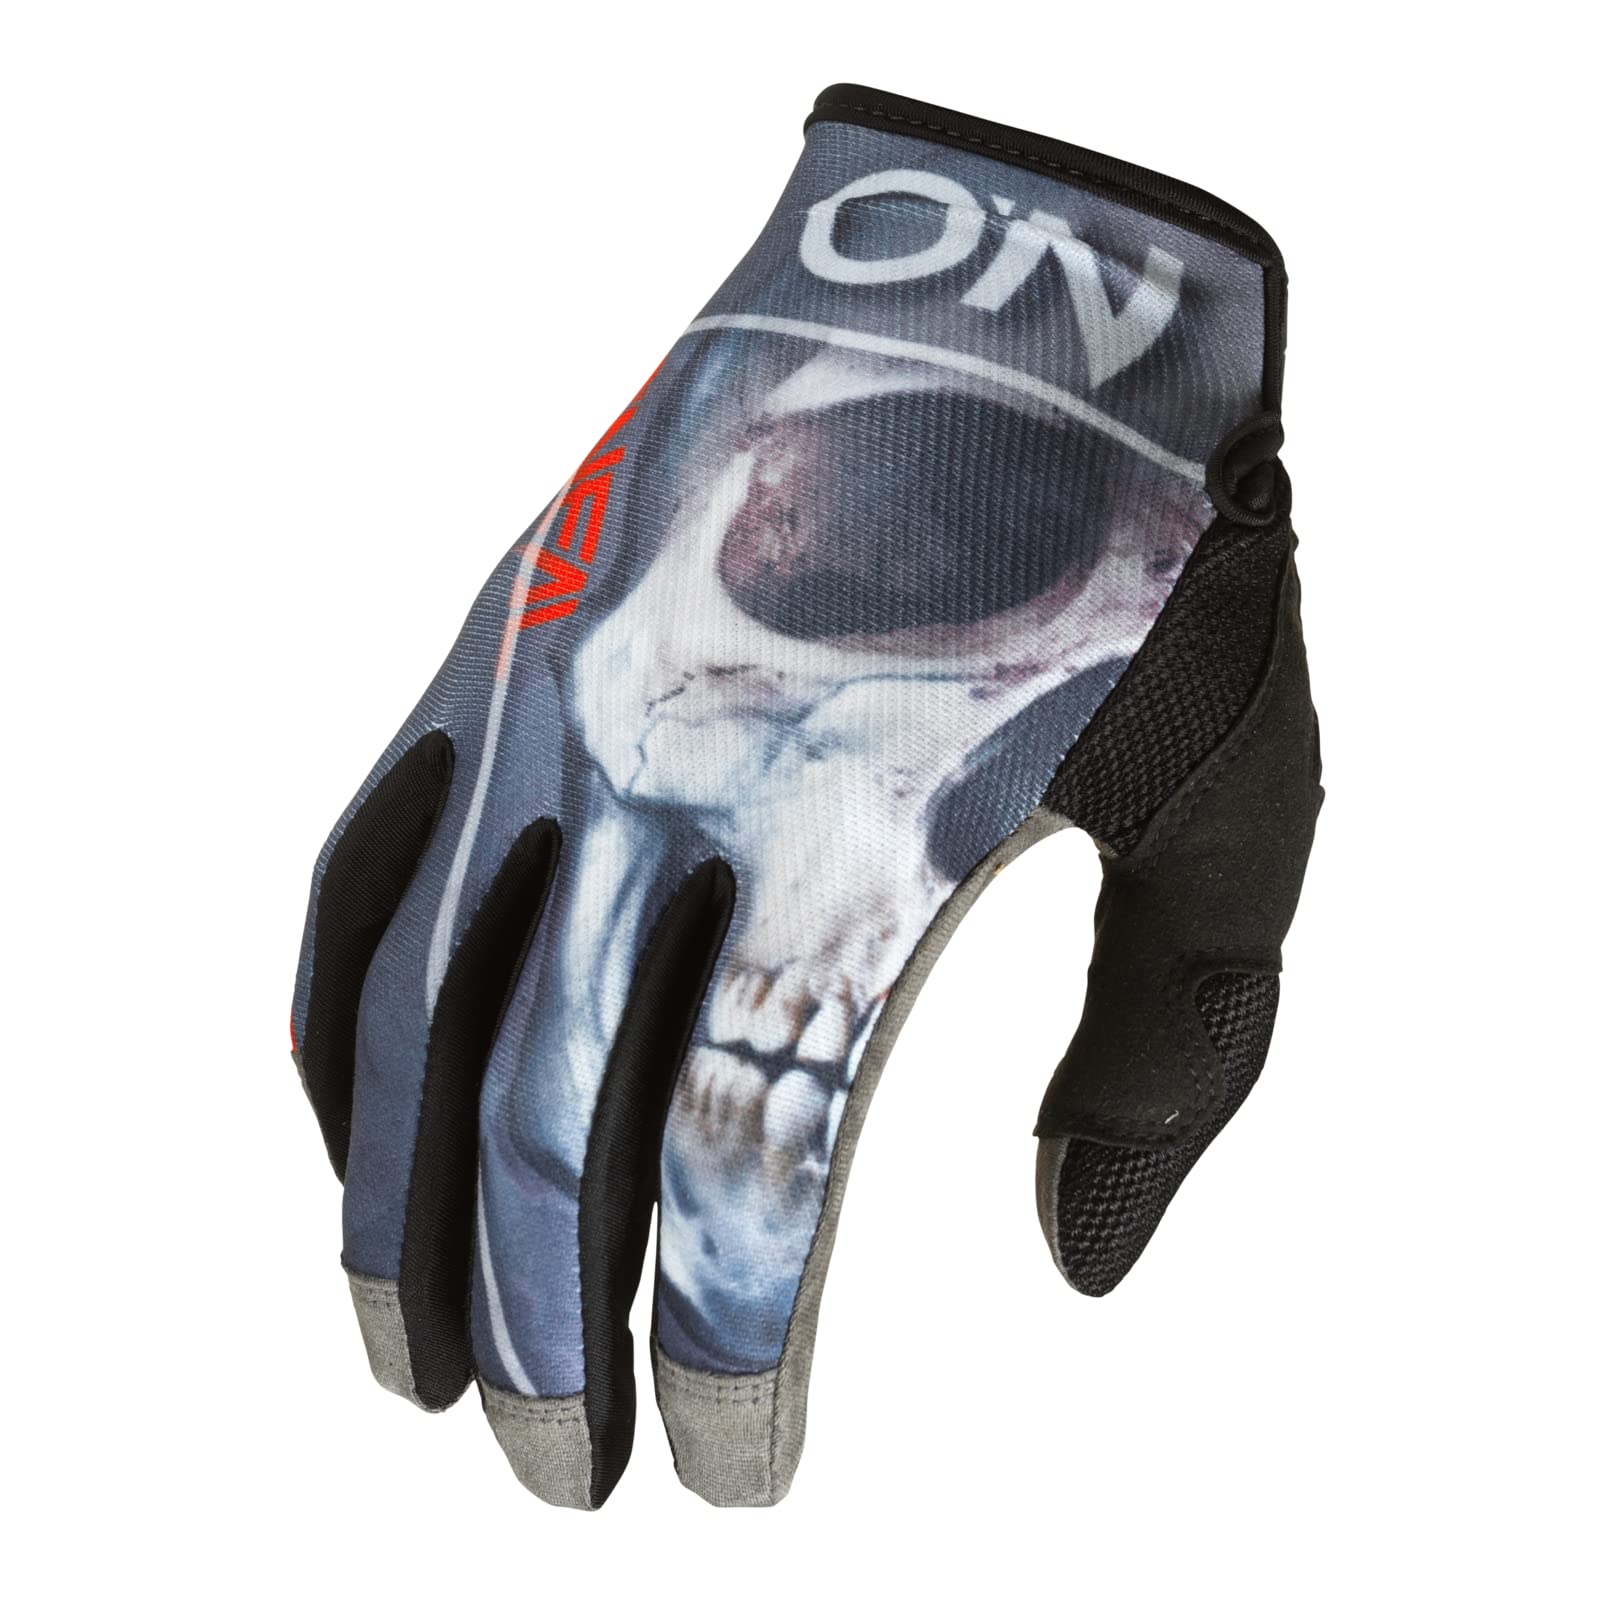 O'NEAL | Fahrrad- & Motocross-Handschuhe | MX MTB DH FR Downhill Freeride | Langlebige, Flexible Materialien, belüftete Nanofront-Handpartie | Mayhem Glove V.22 | Erwachsene | Schwarz Rot | XL von O'NEAL